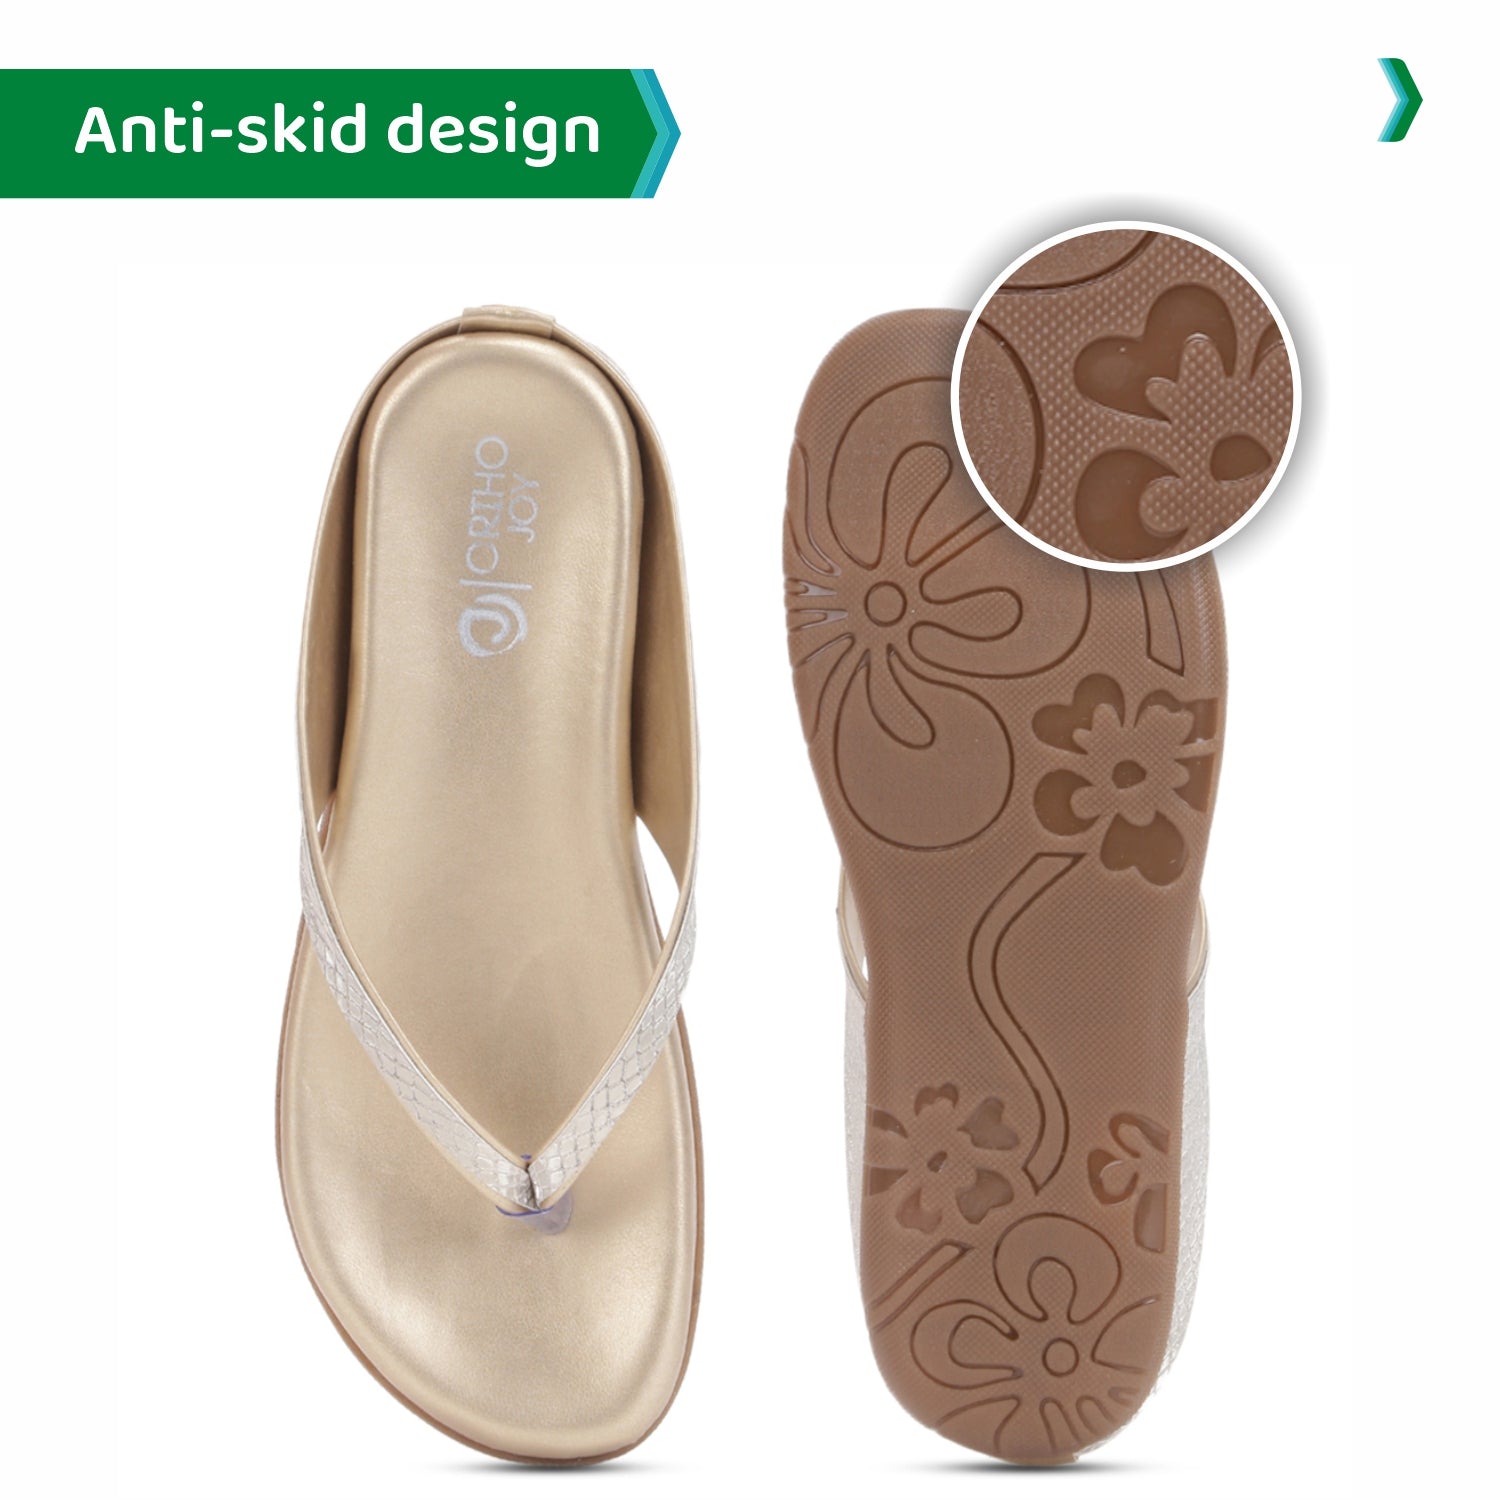 ORTHO JOY Fancy doctor Comfortable Flat sandals stylish